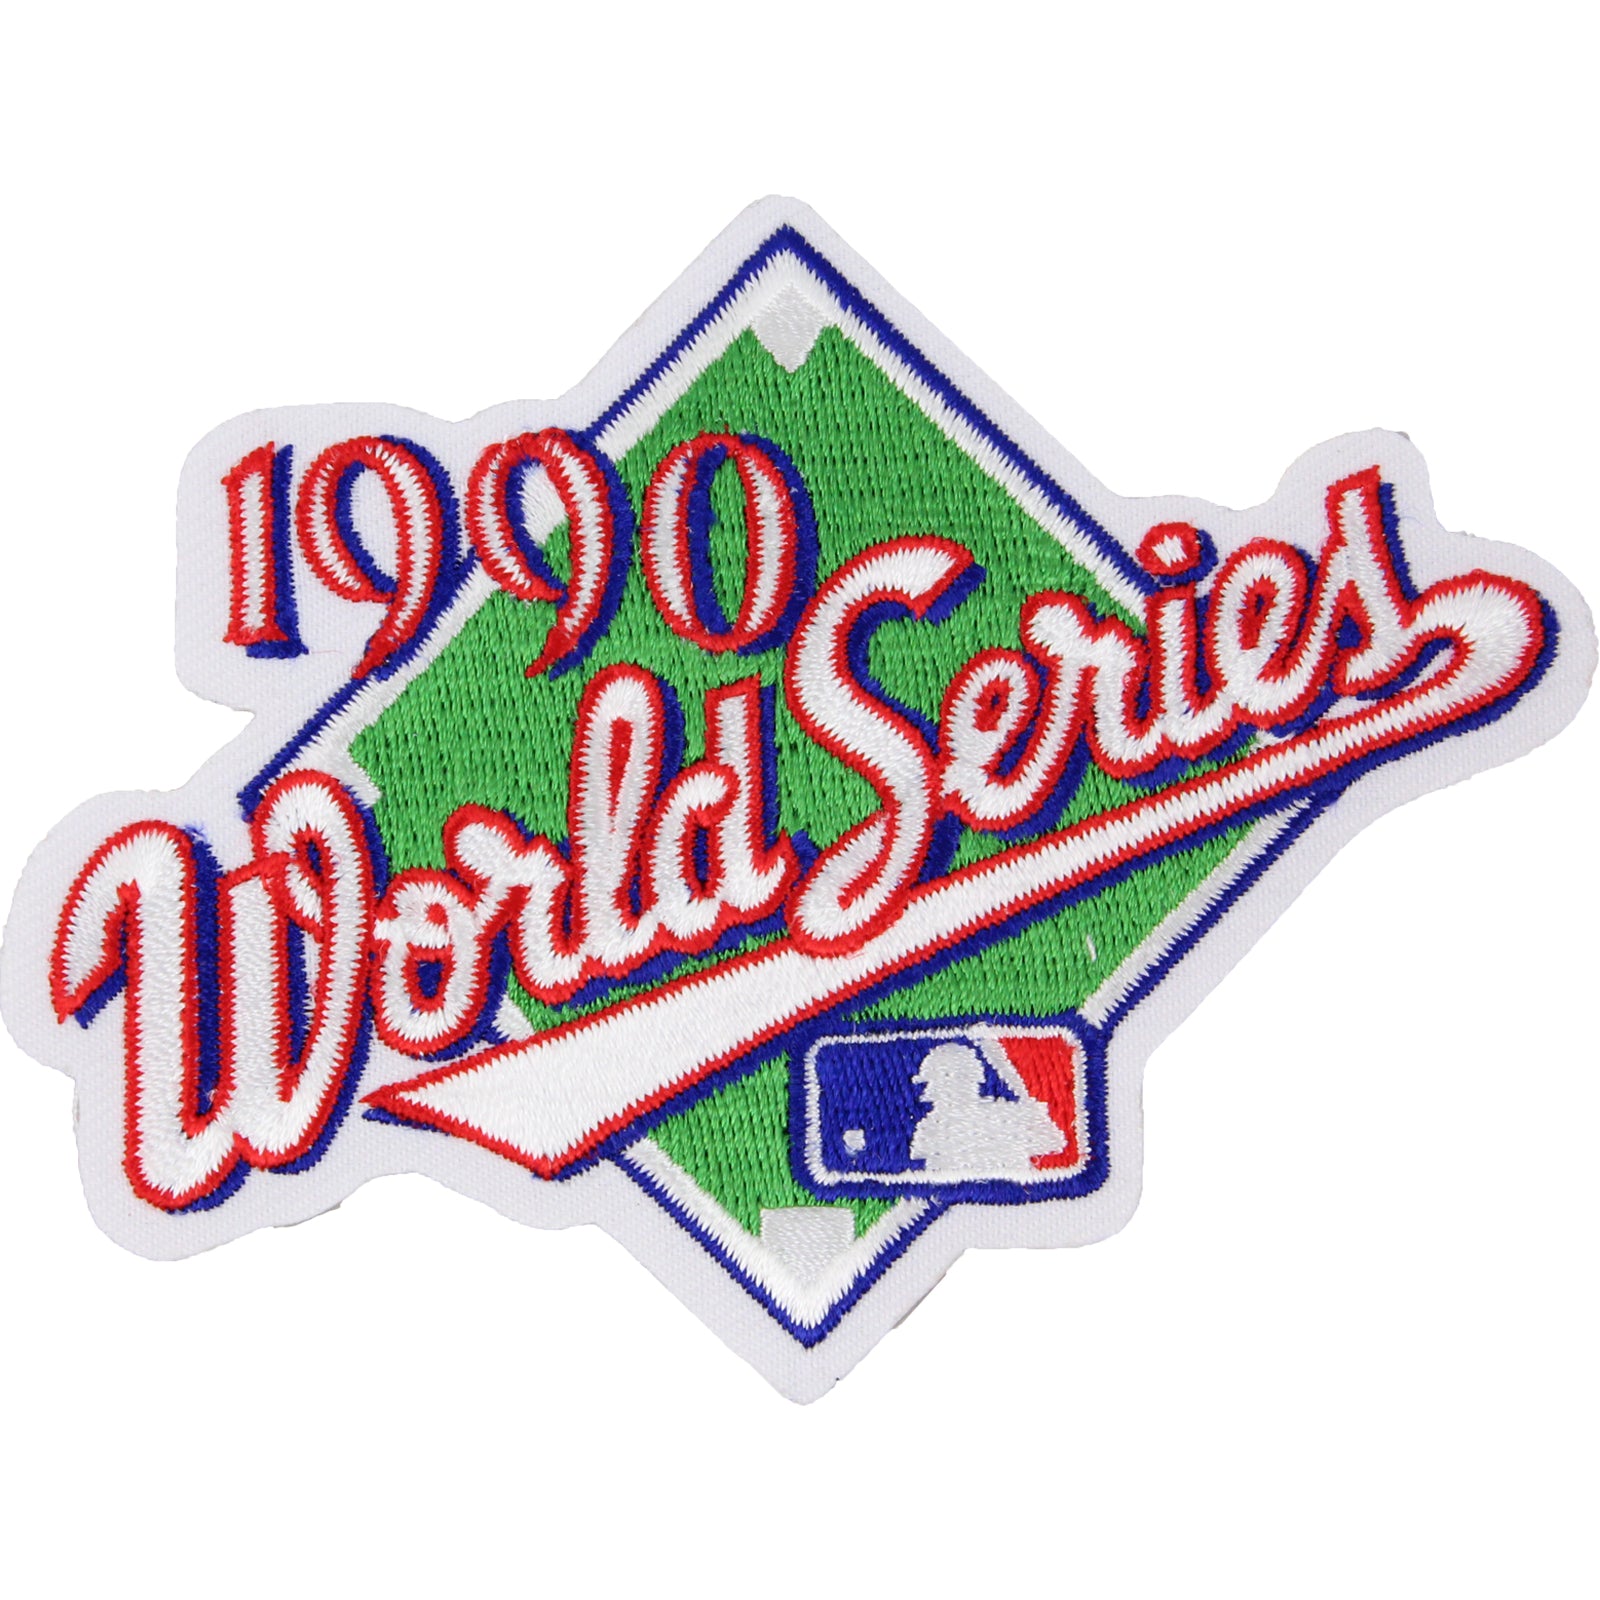 1990 MLB World Series Logo Jersey Patch Cincinnati Reds vs Oakland Athletics A's 